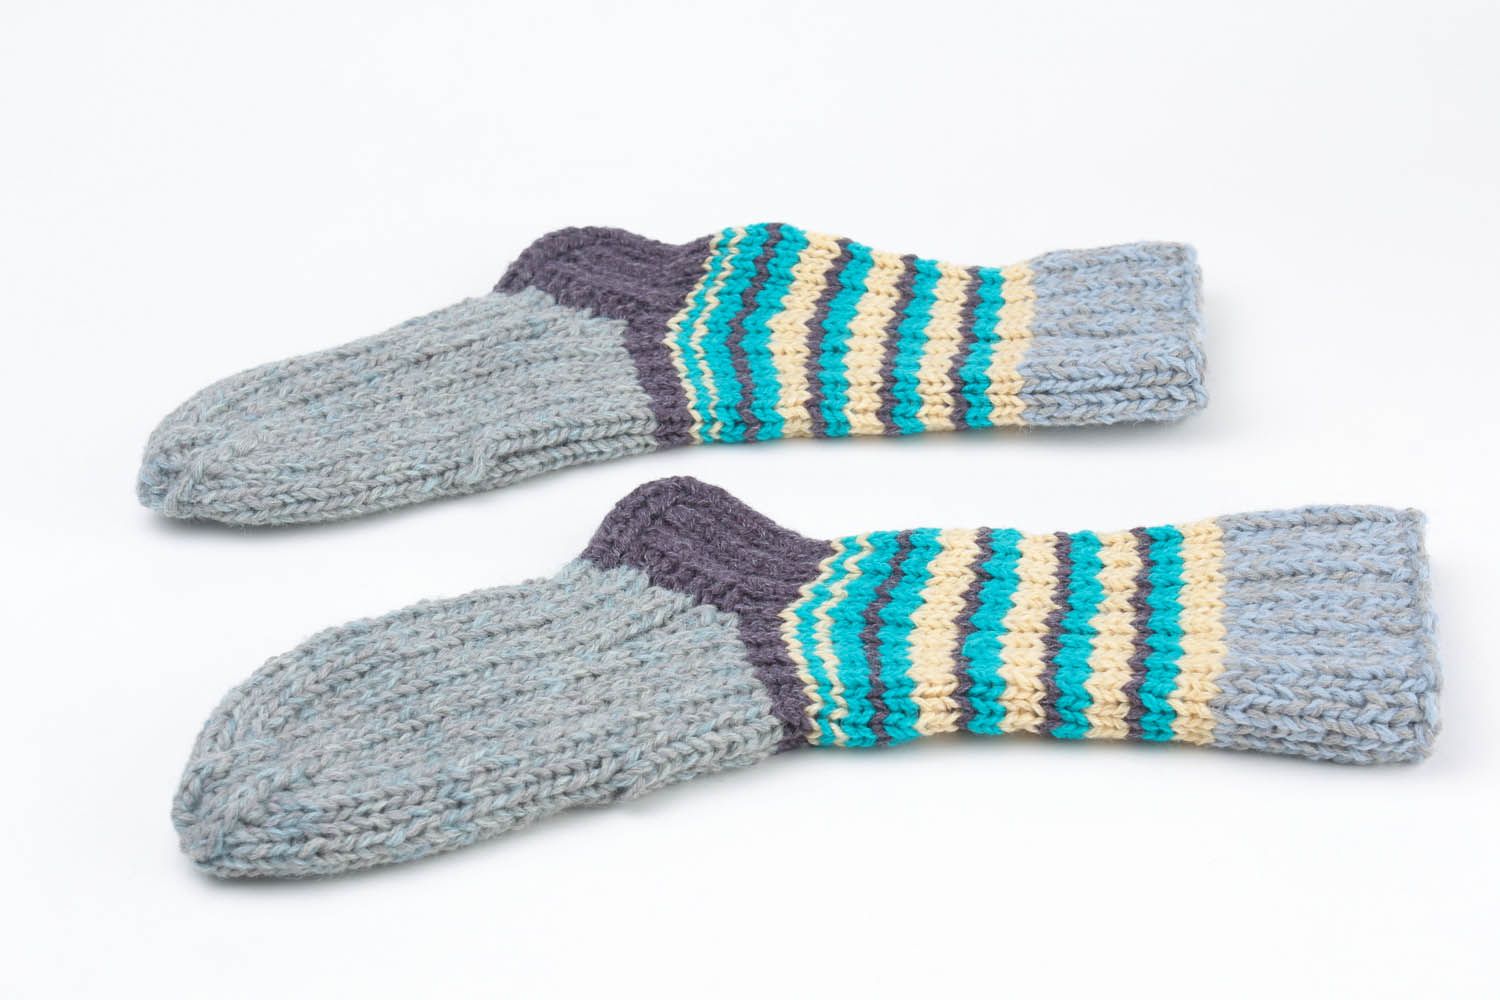 Socks knitted manually photo 3